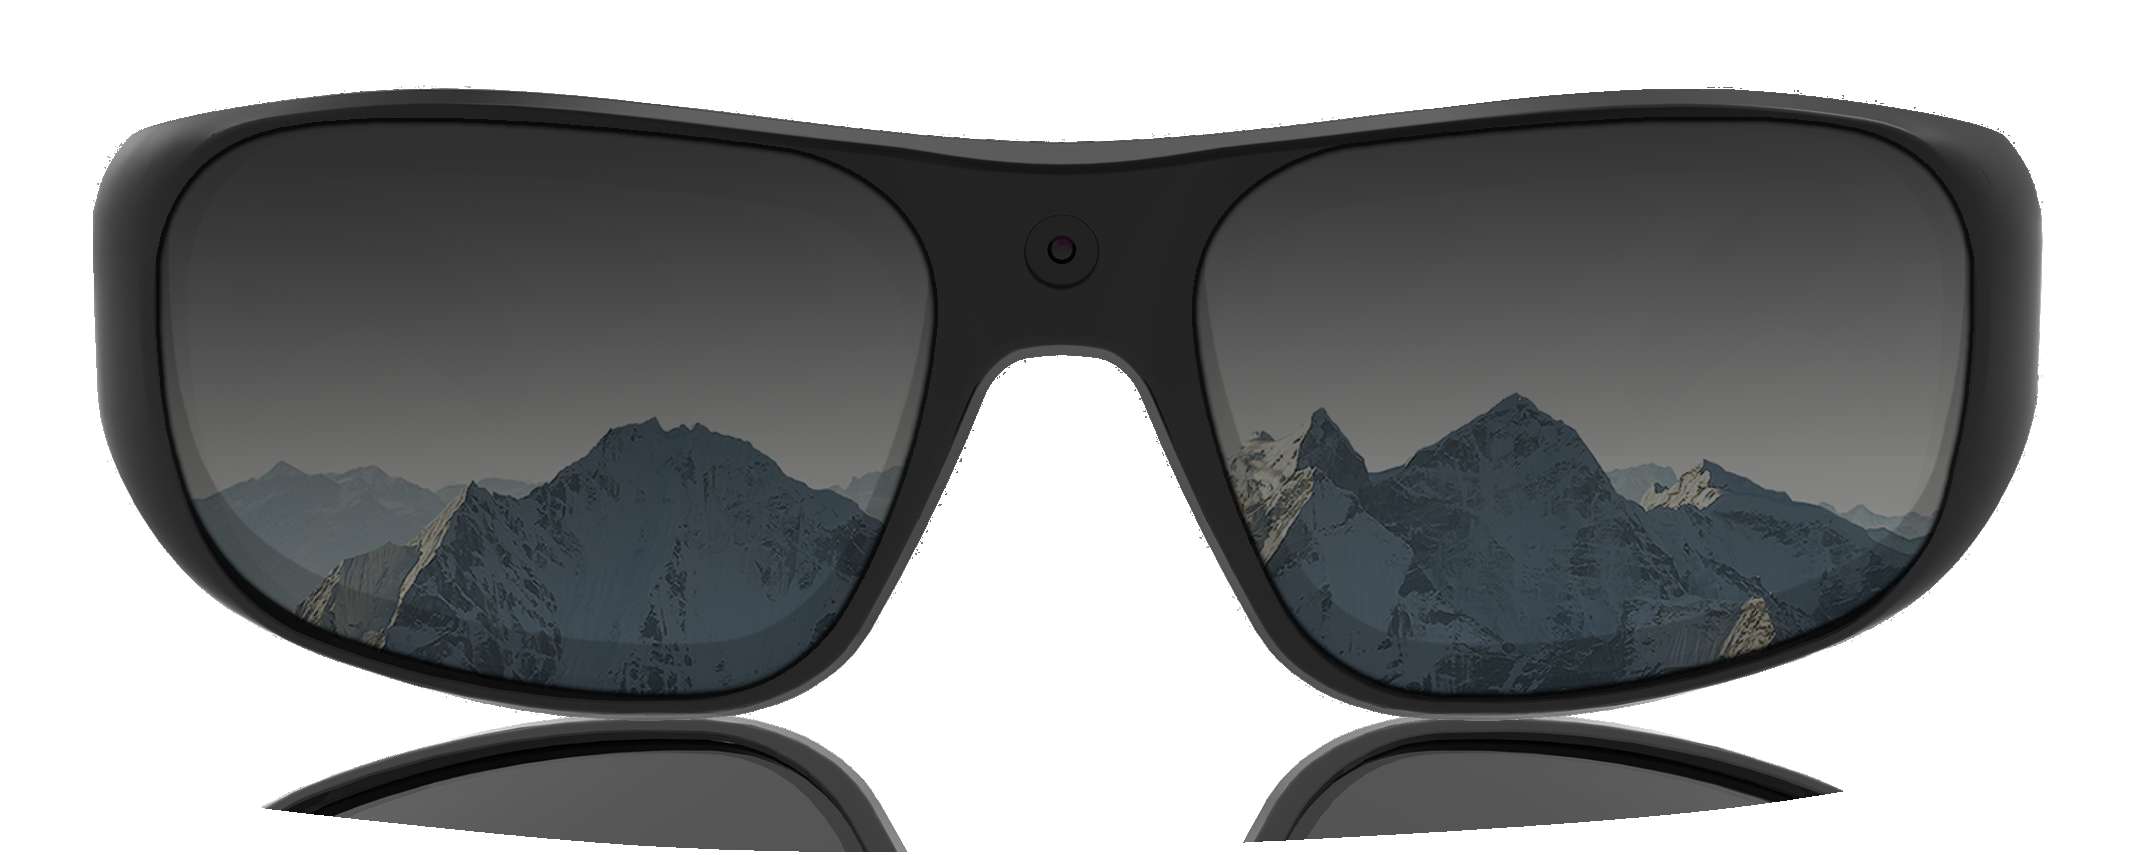 Bear Grylls Waterproof Video Eyewear